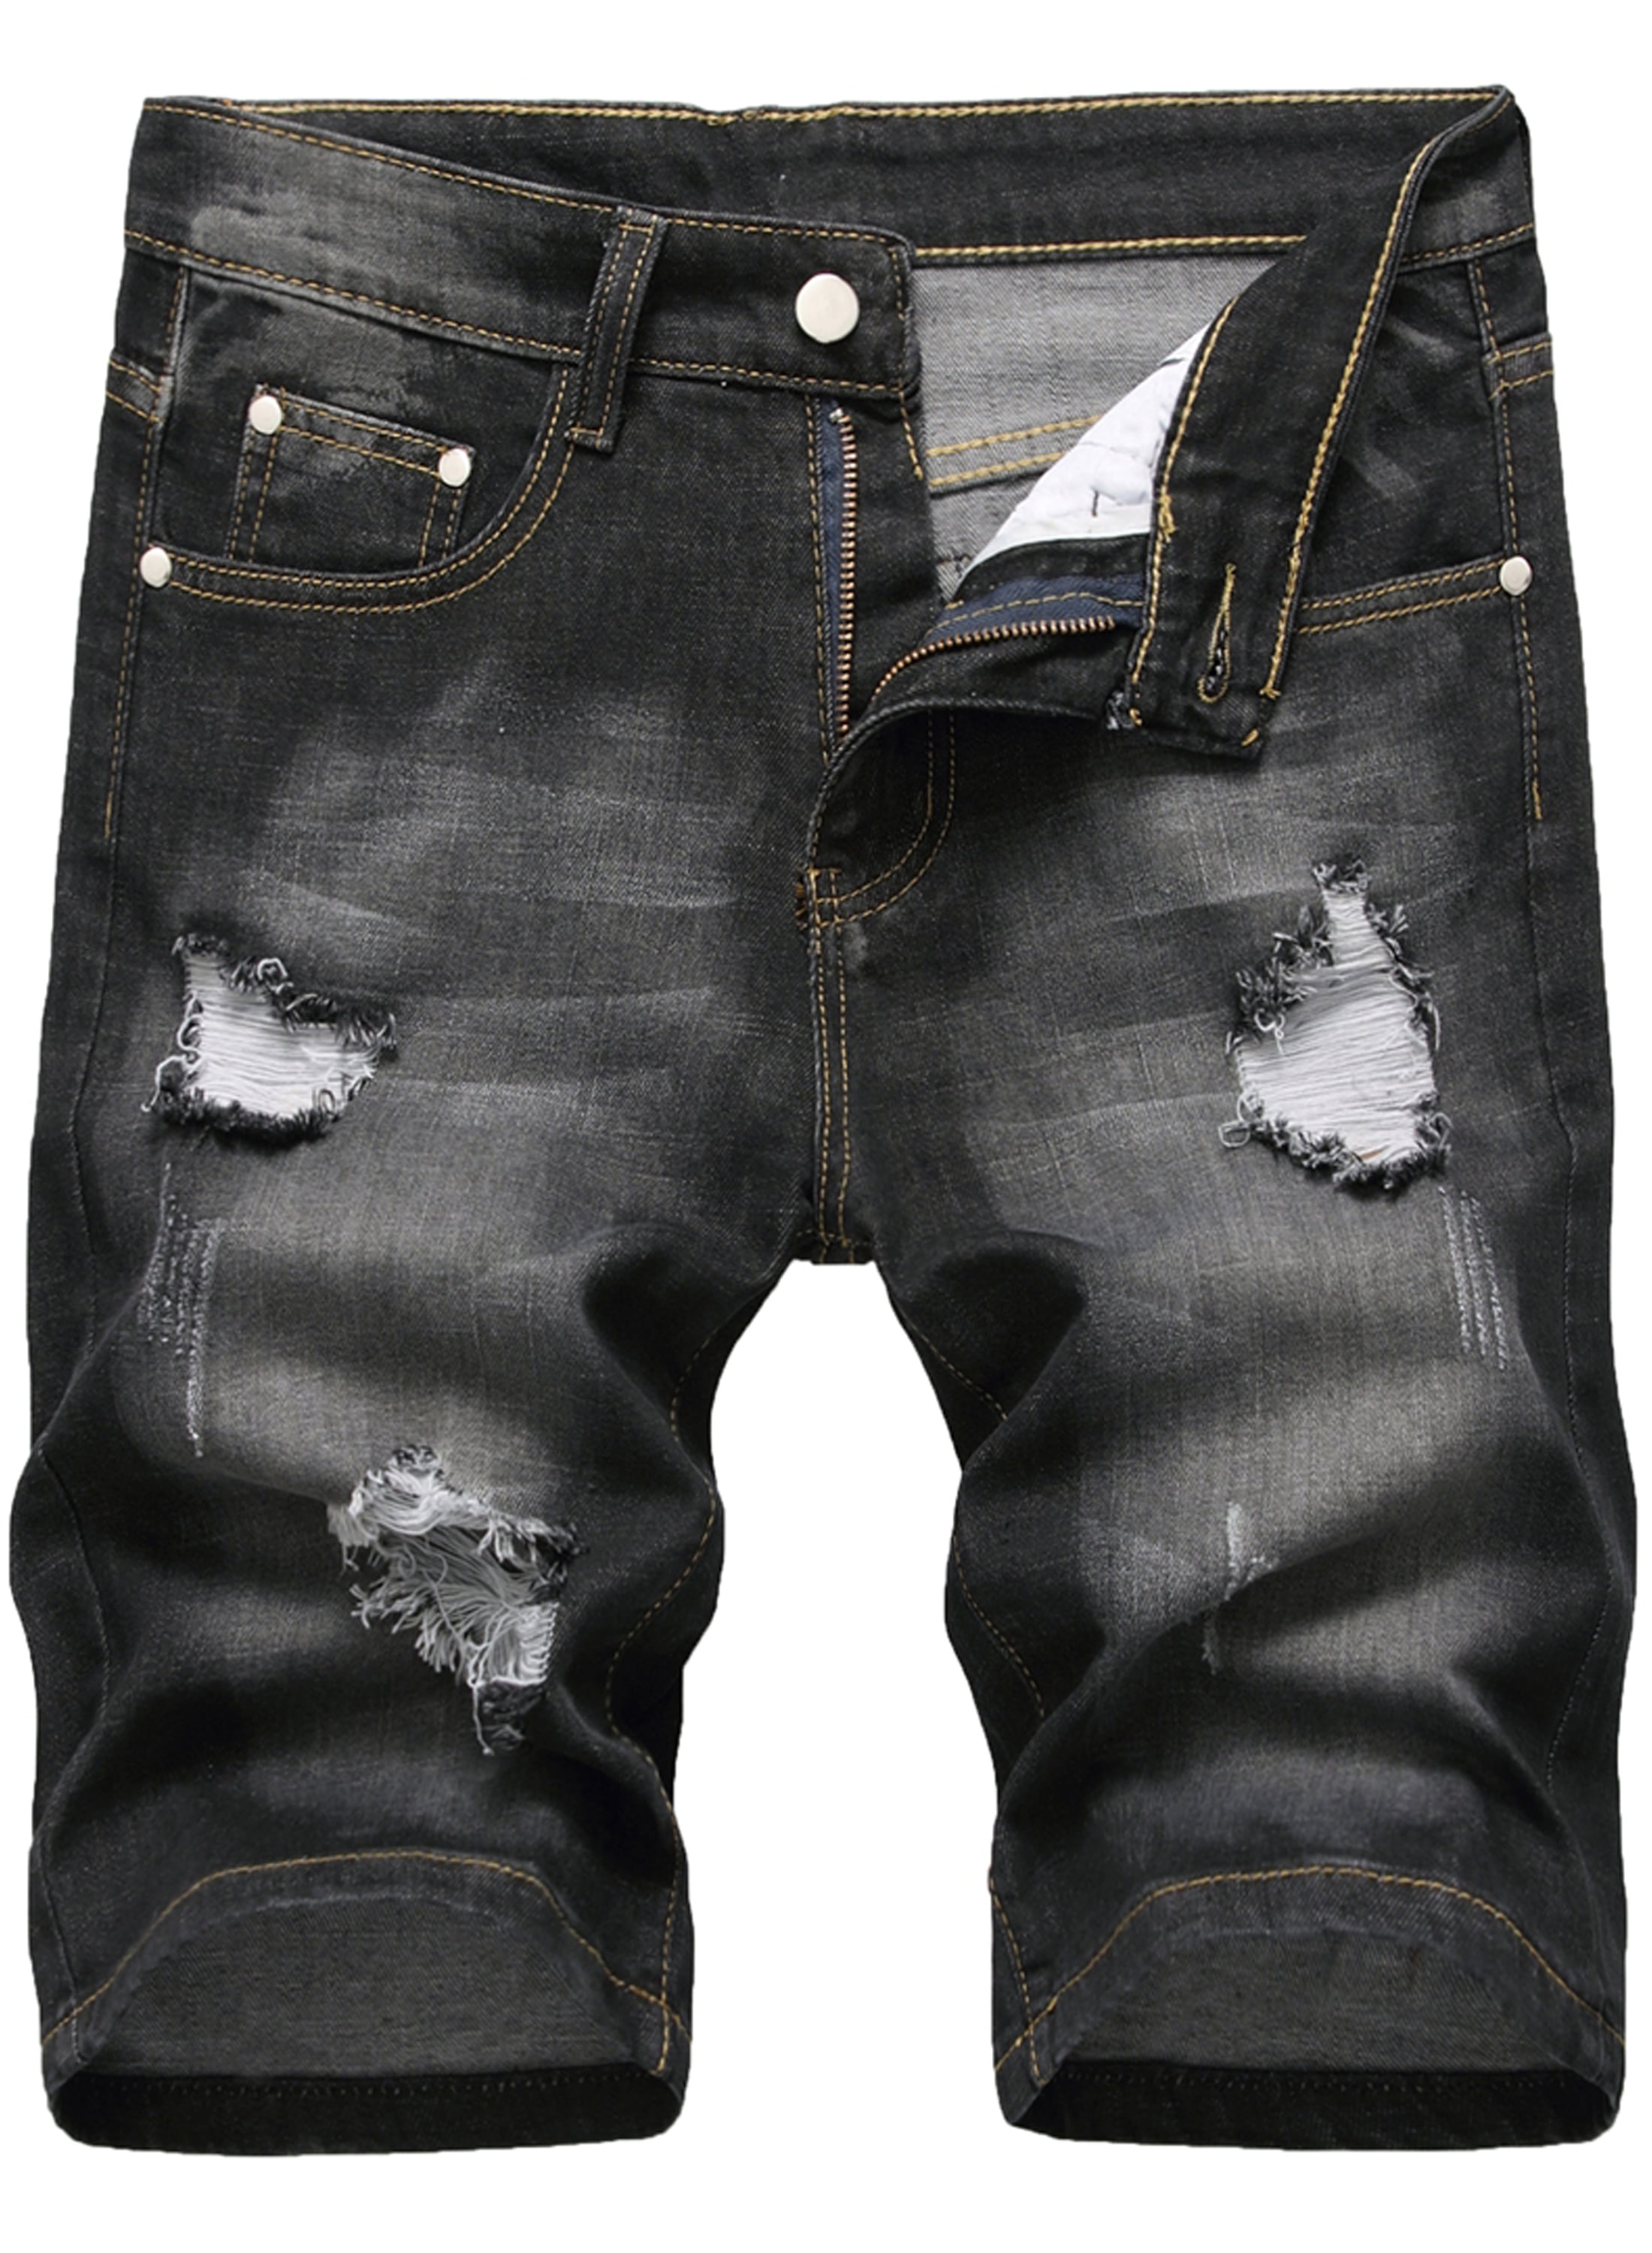 stå trussel affald LZLER Stretch Jean Shorts for Men Ripped Denim Shorts Black Jeans Shorts -  Walmart.com